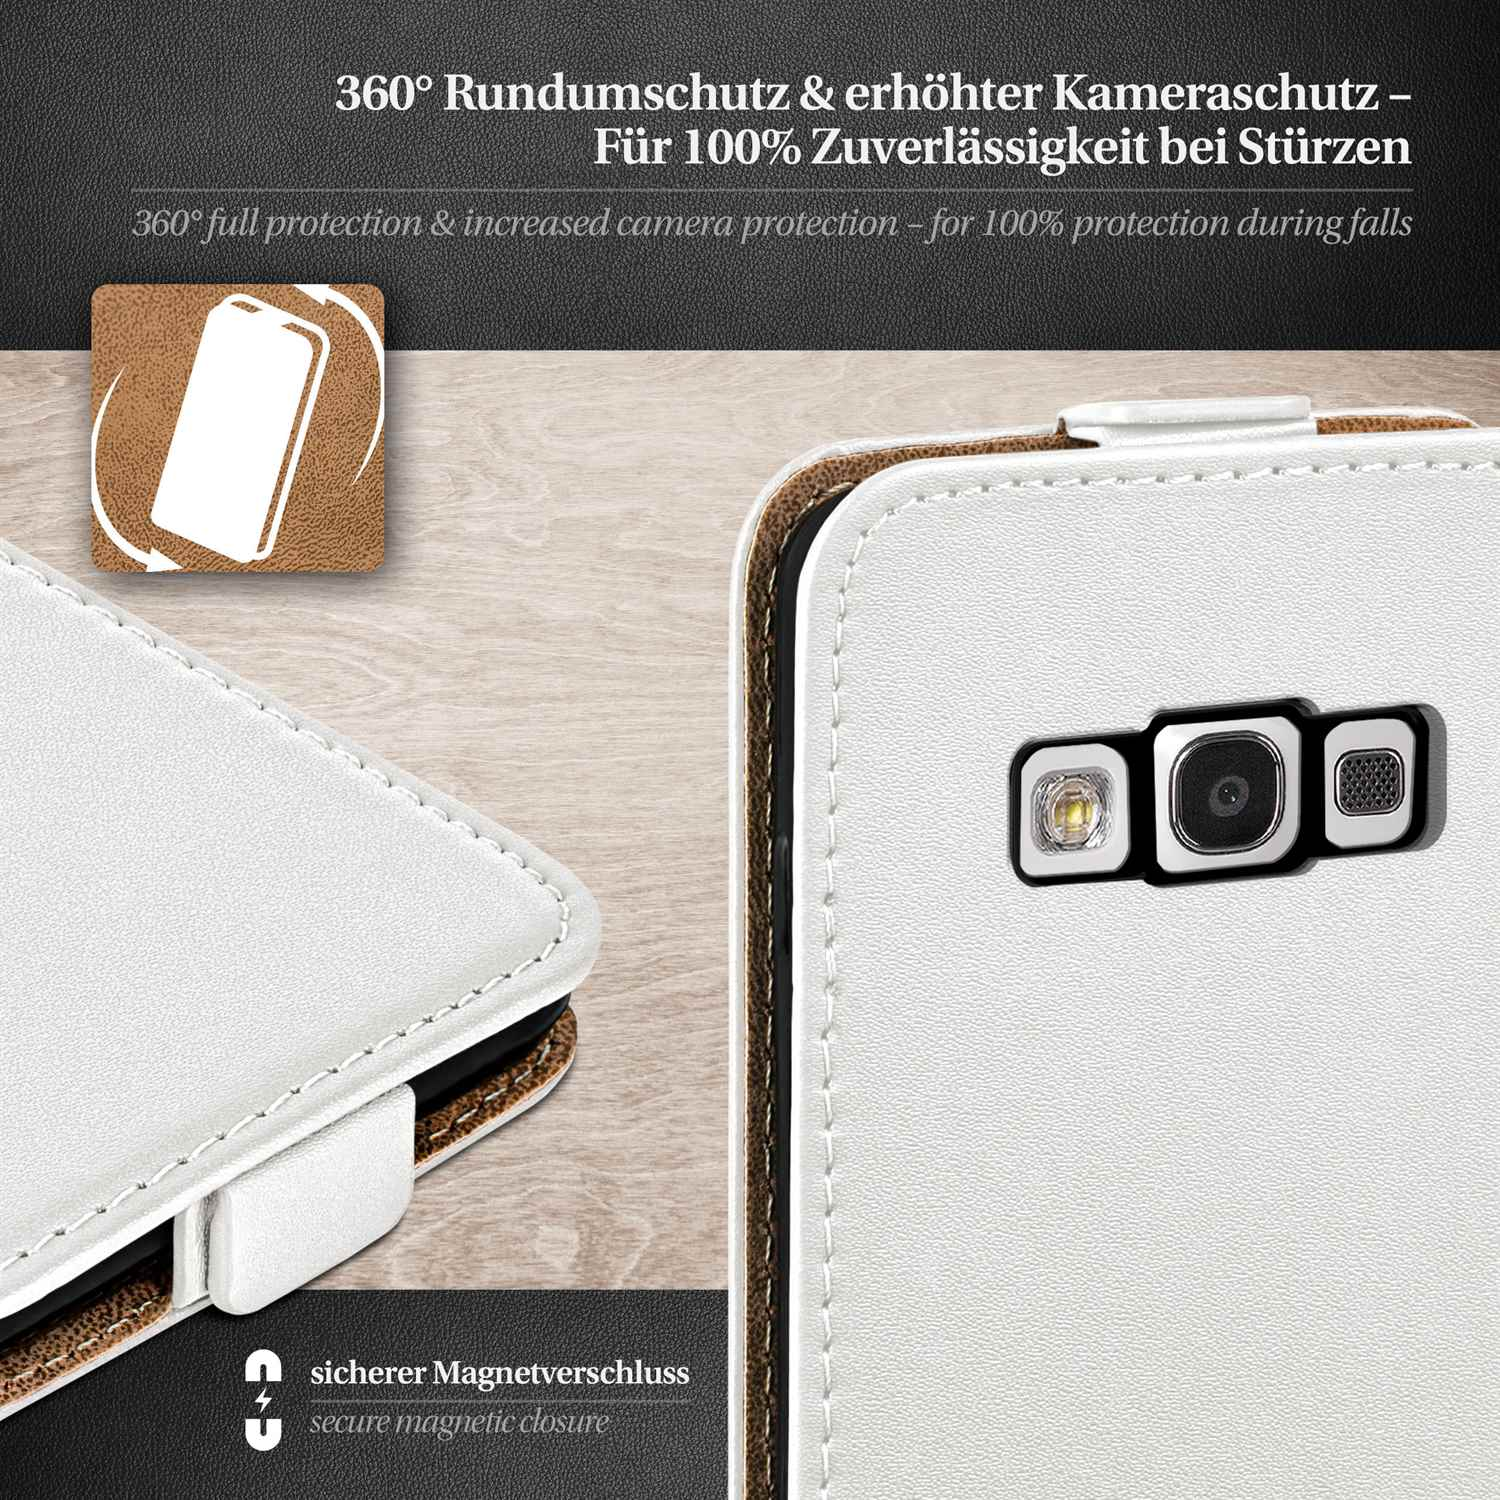 MOEX Flip Case, Flip Cover, Samsung, Pearl-White Neo, S3 Galaxy